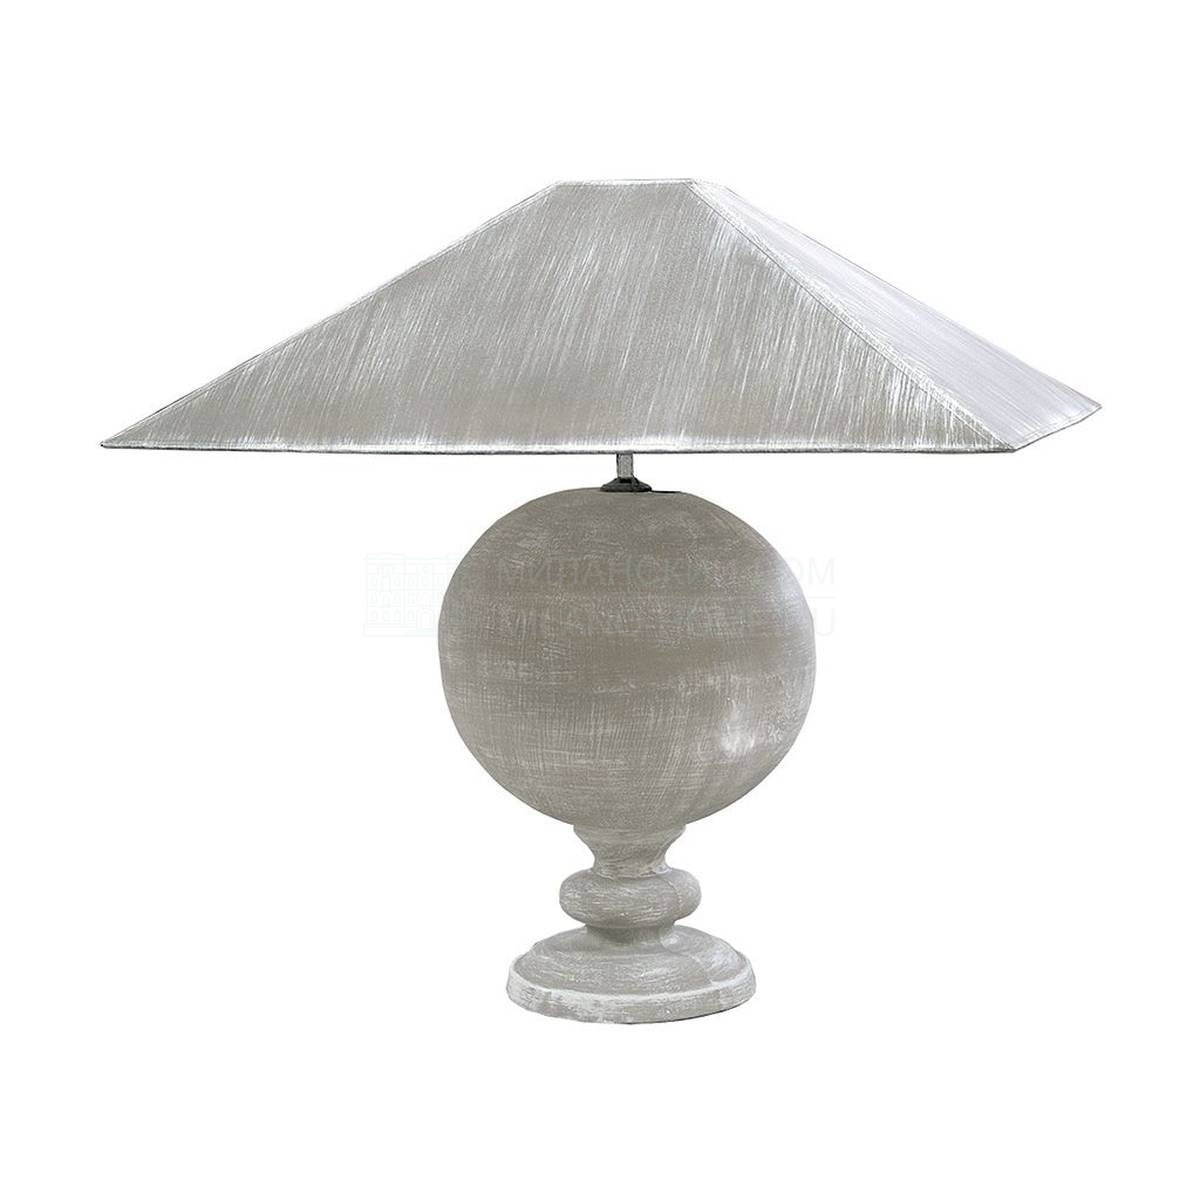 Настольная лампа 726 table lamp из Испании фабрики GUADARTE